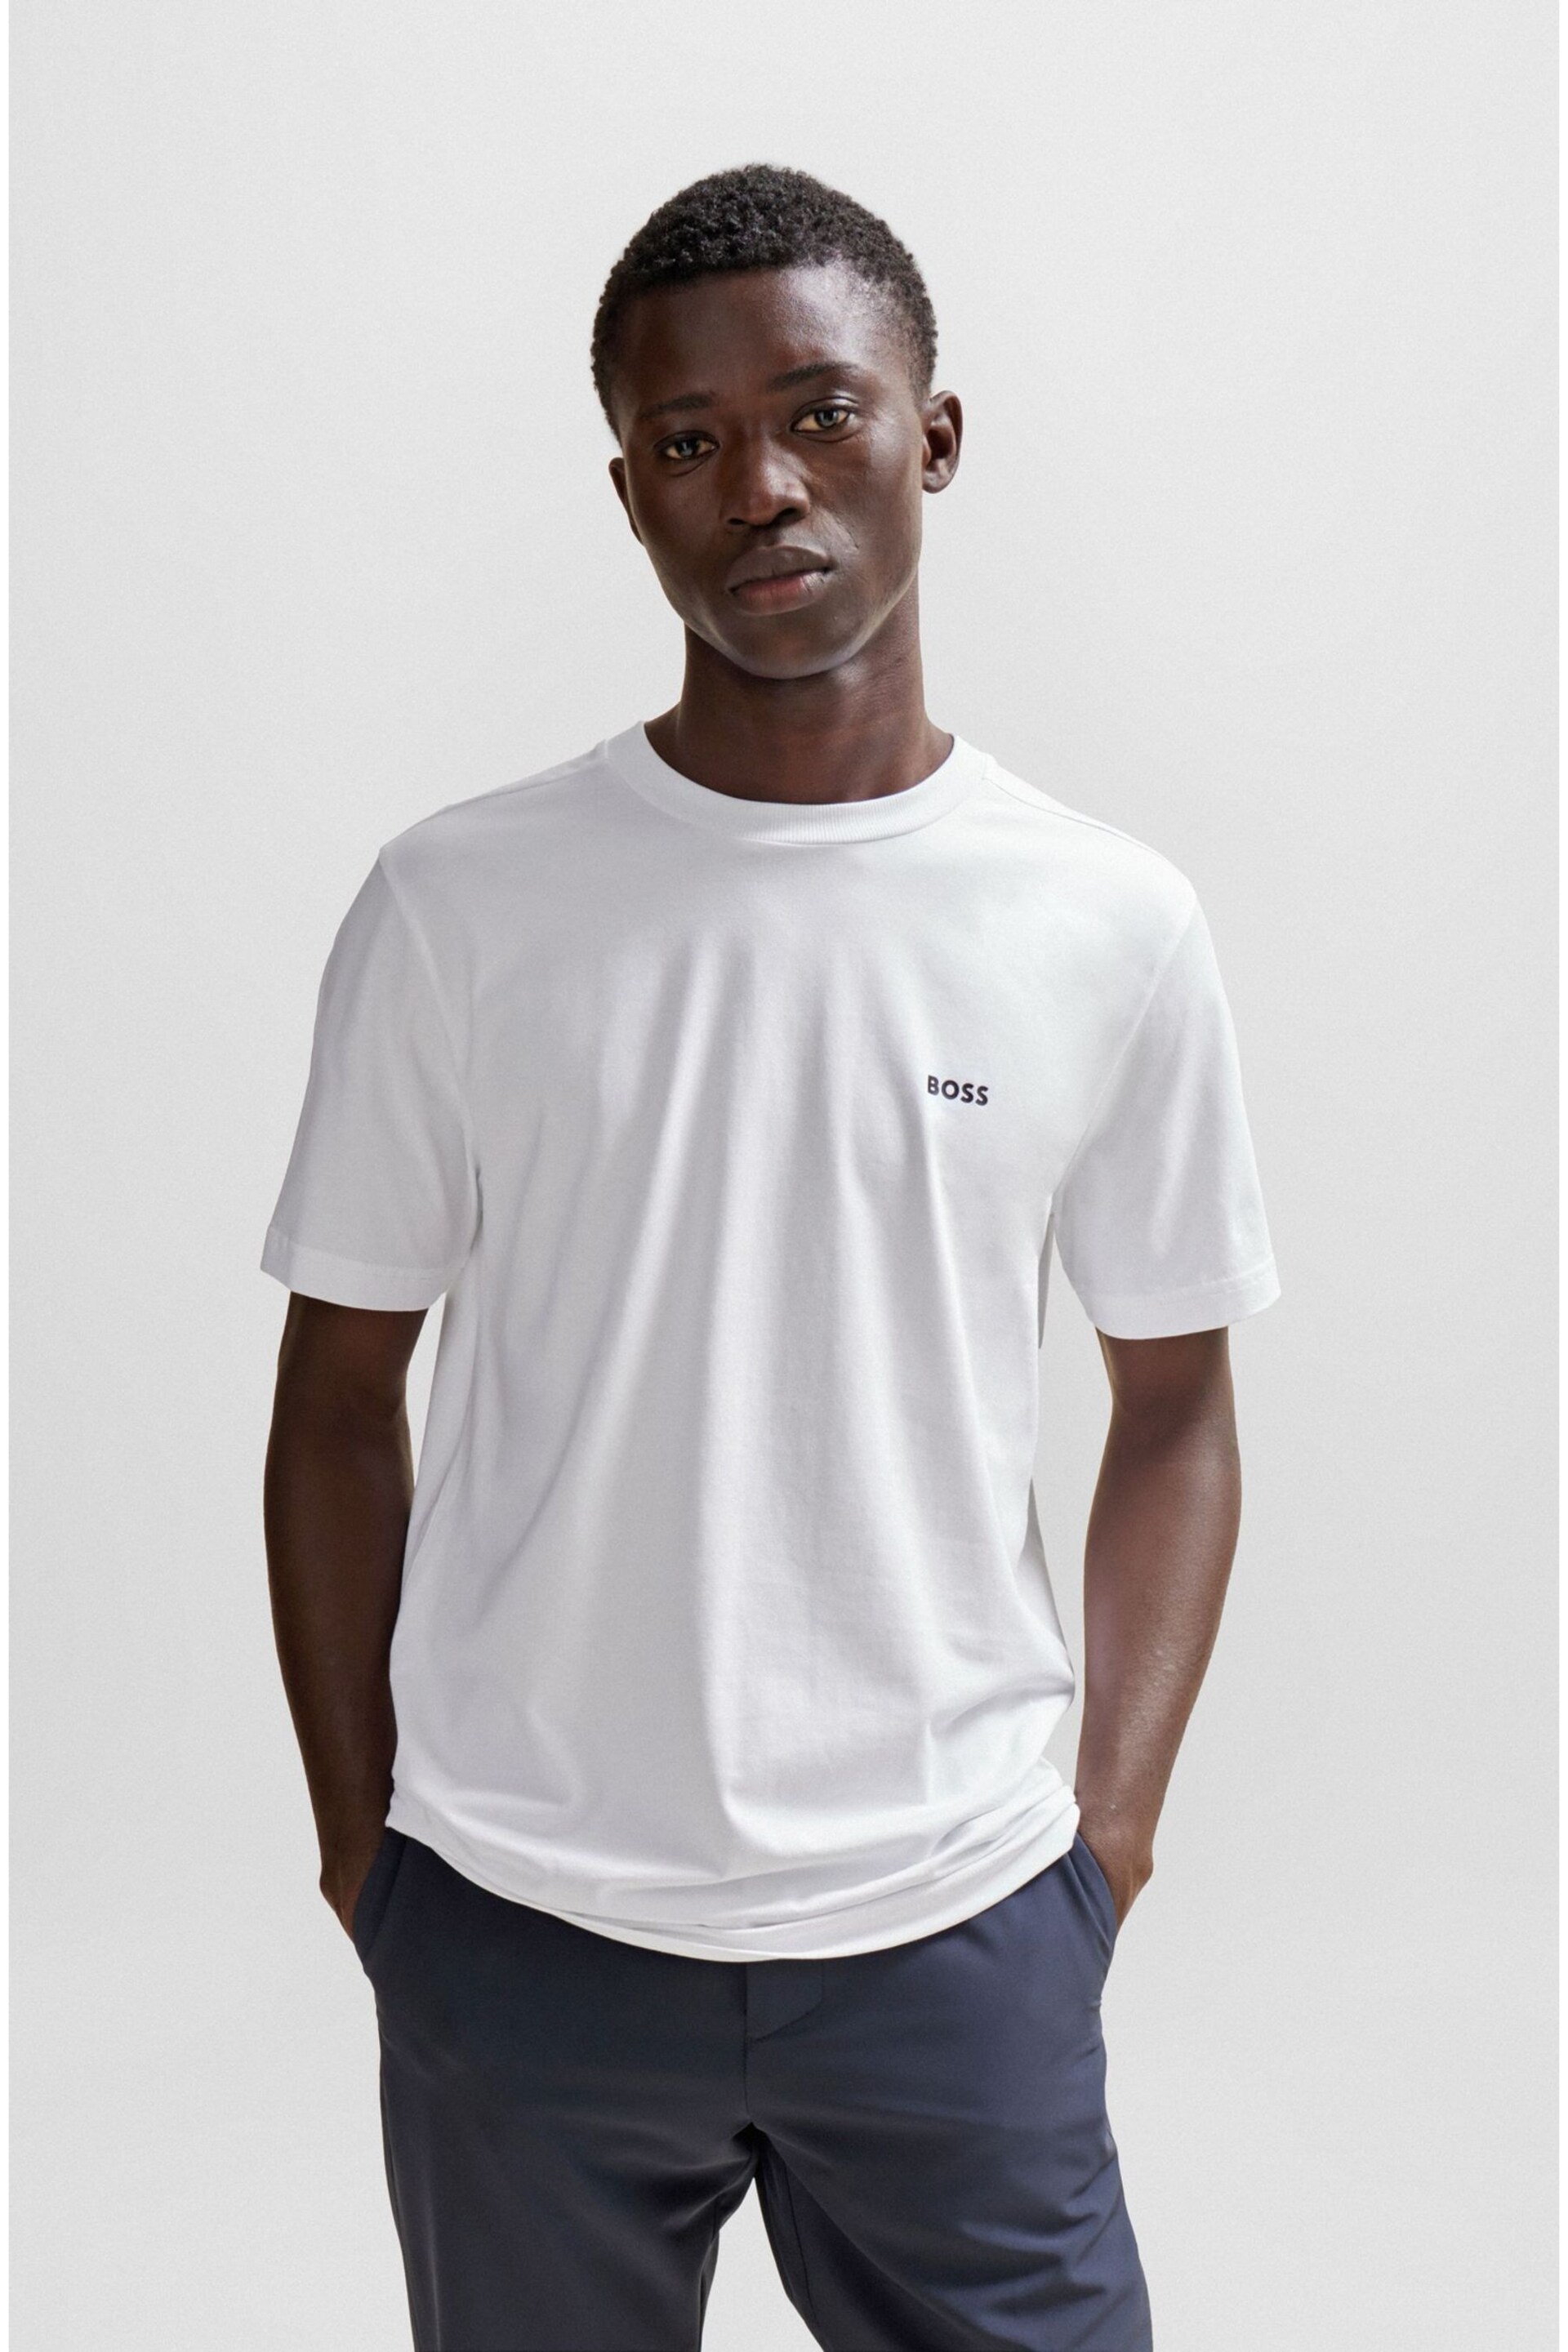 BOSS White Contrast-Logo T-Shirt - Image 1 of 5